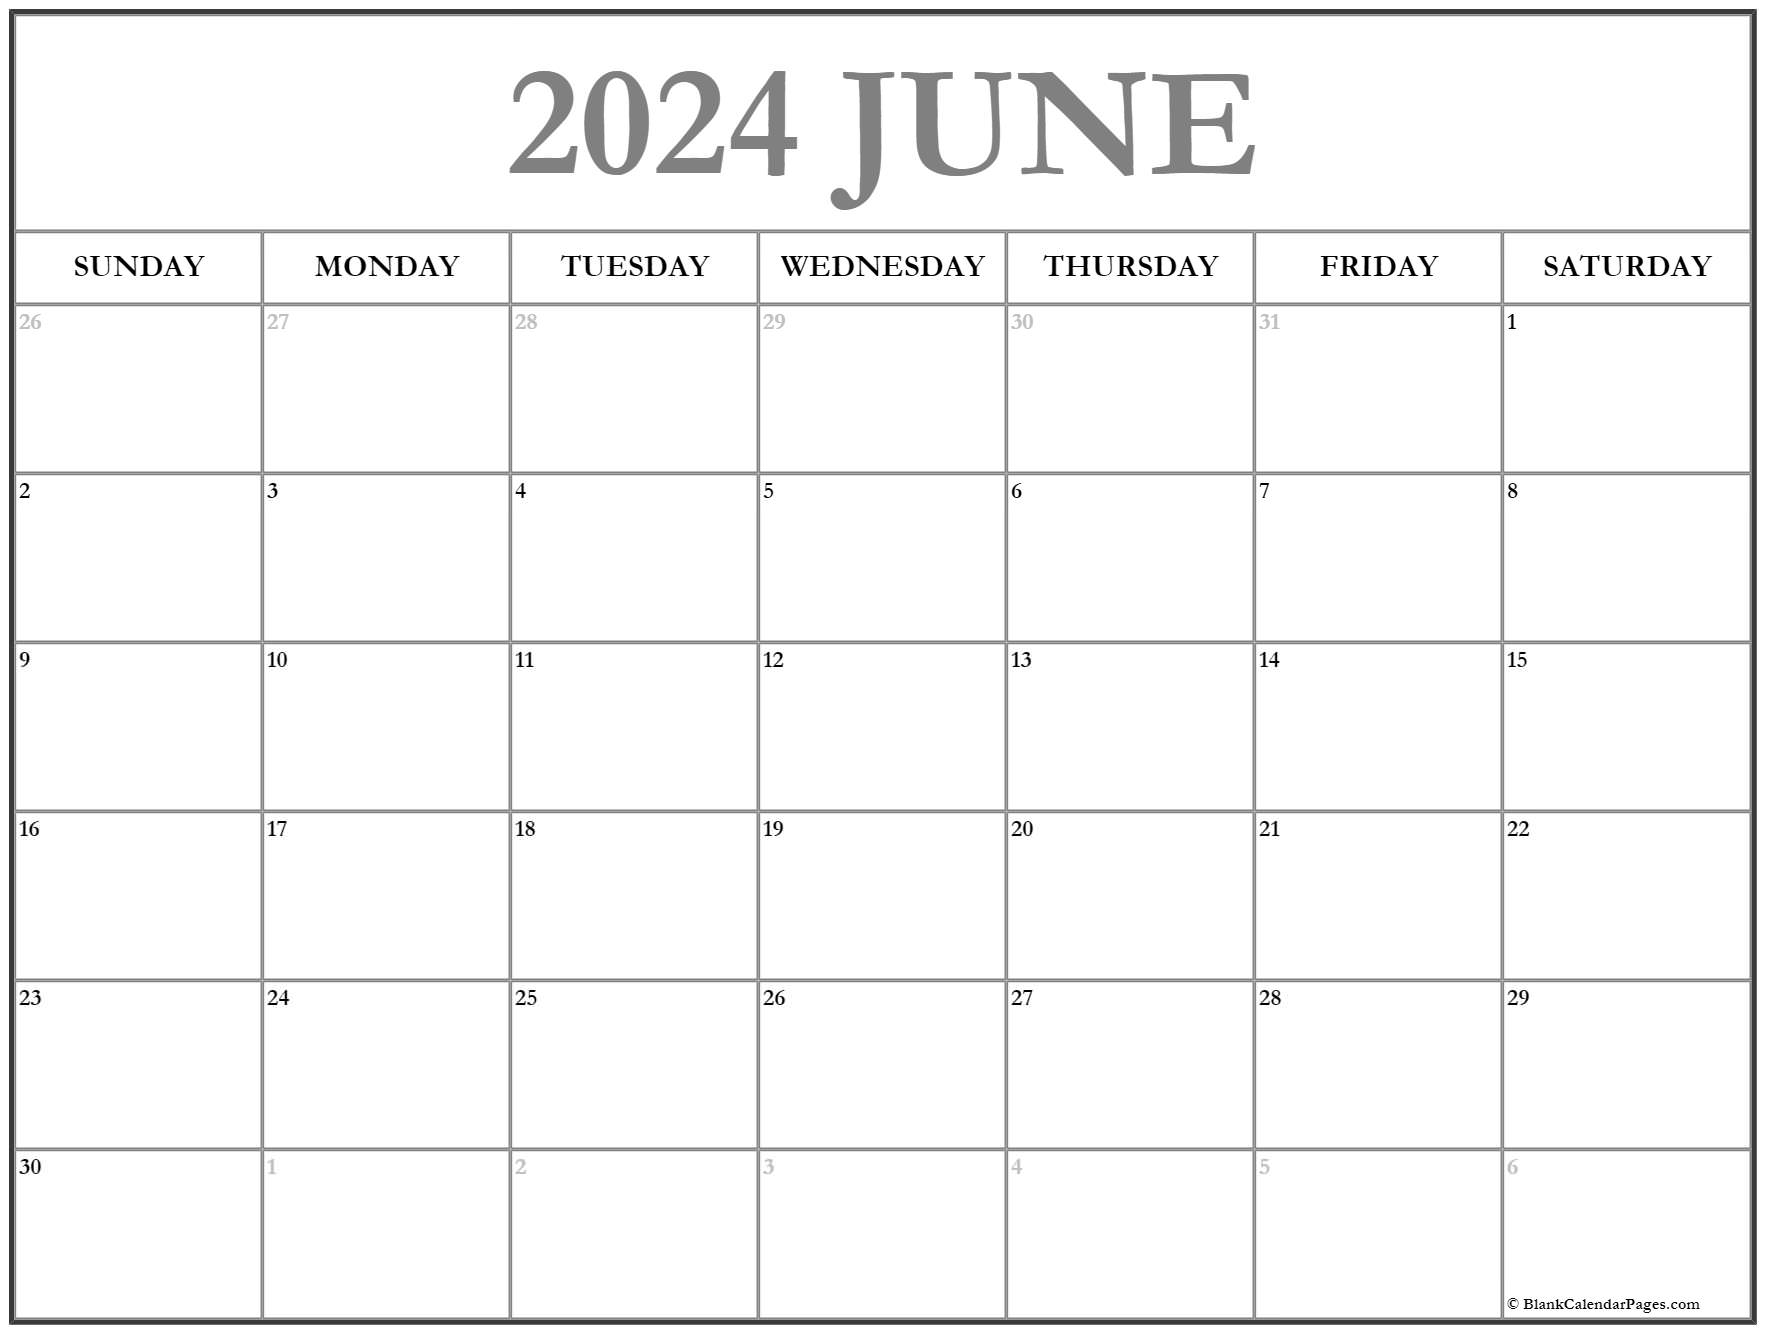 June 2021 calendar | free printable monthly calendars